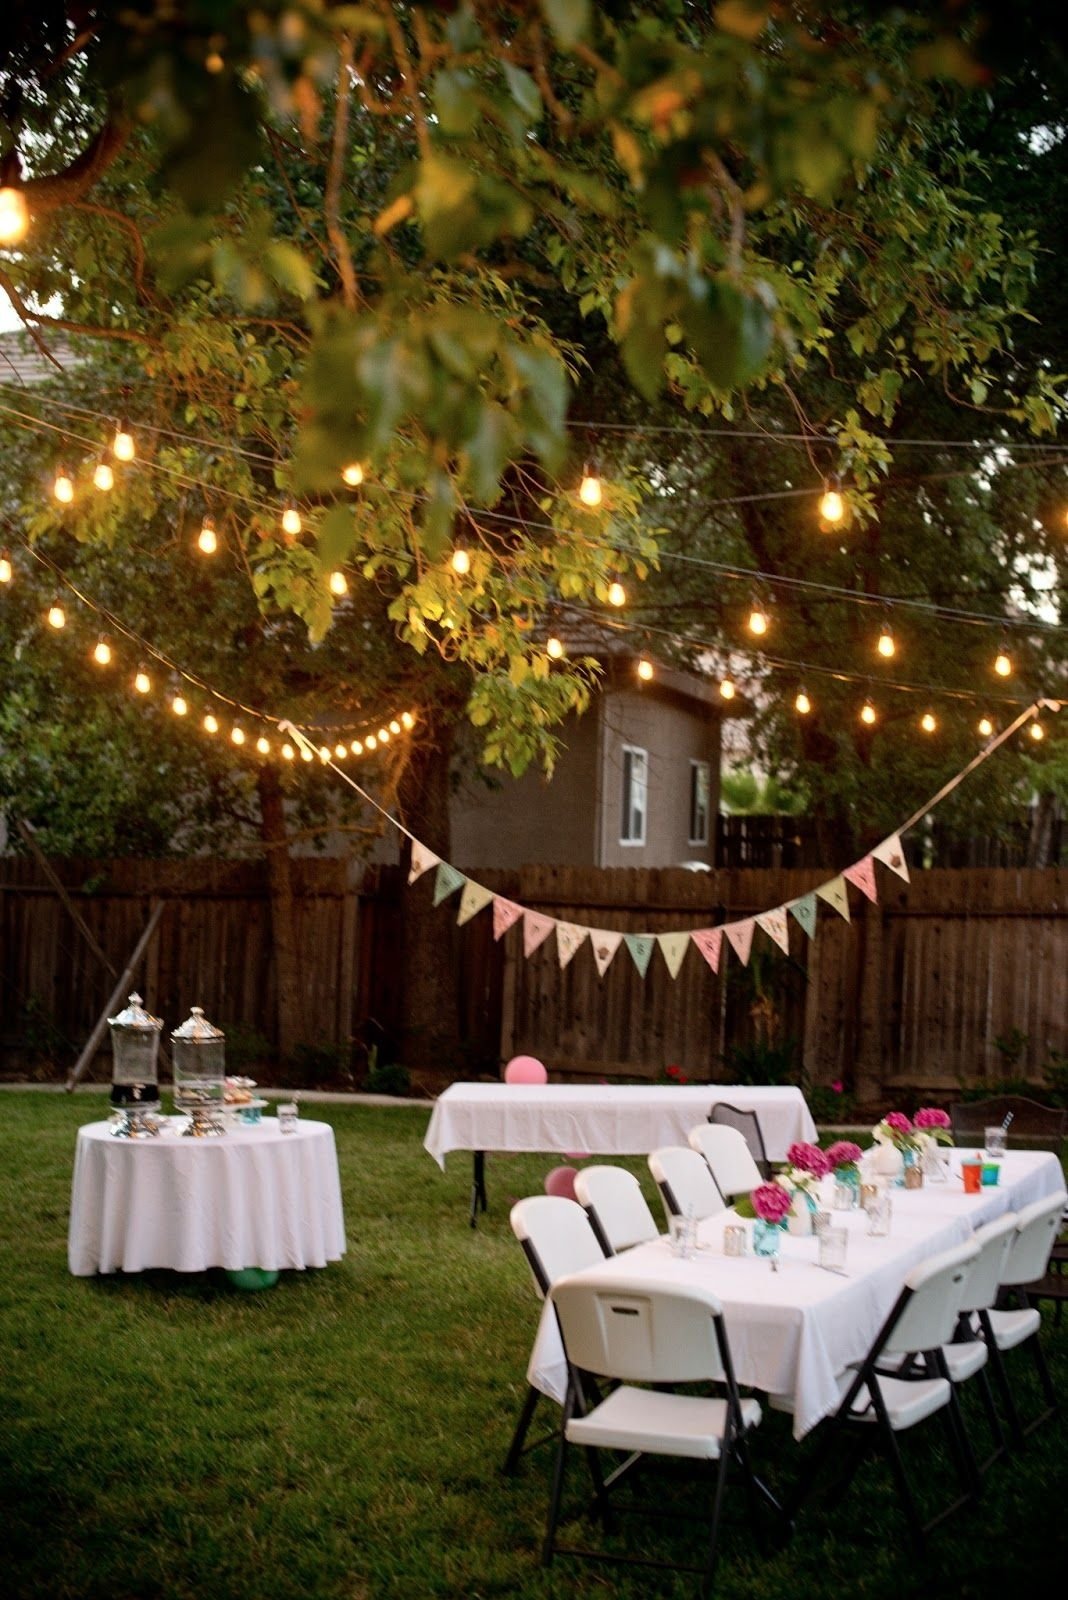 10 Famous Outdoor Birthday Party Ideas For Adults backyard birthday fun pink hydrangeas polka dot napkins 1 2022